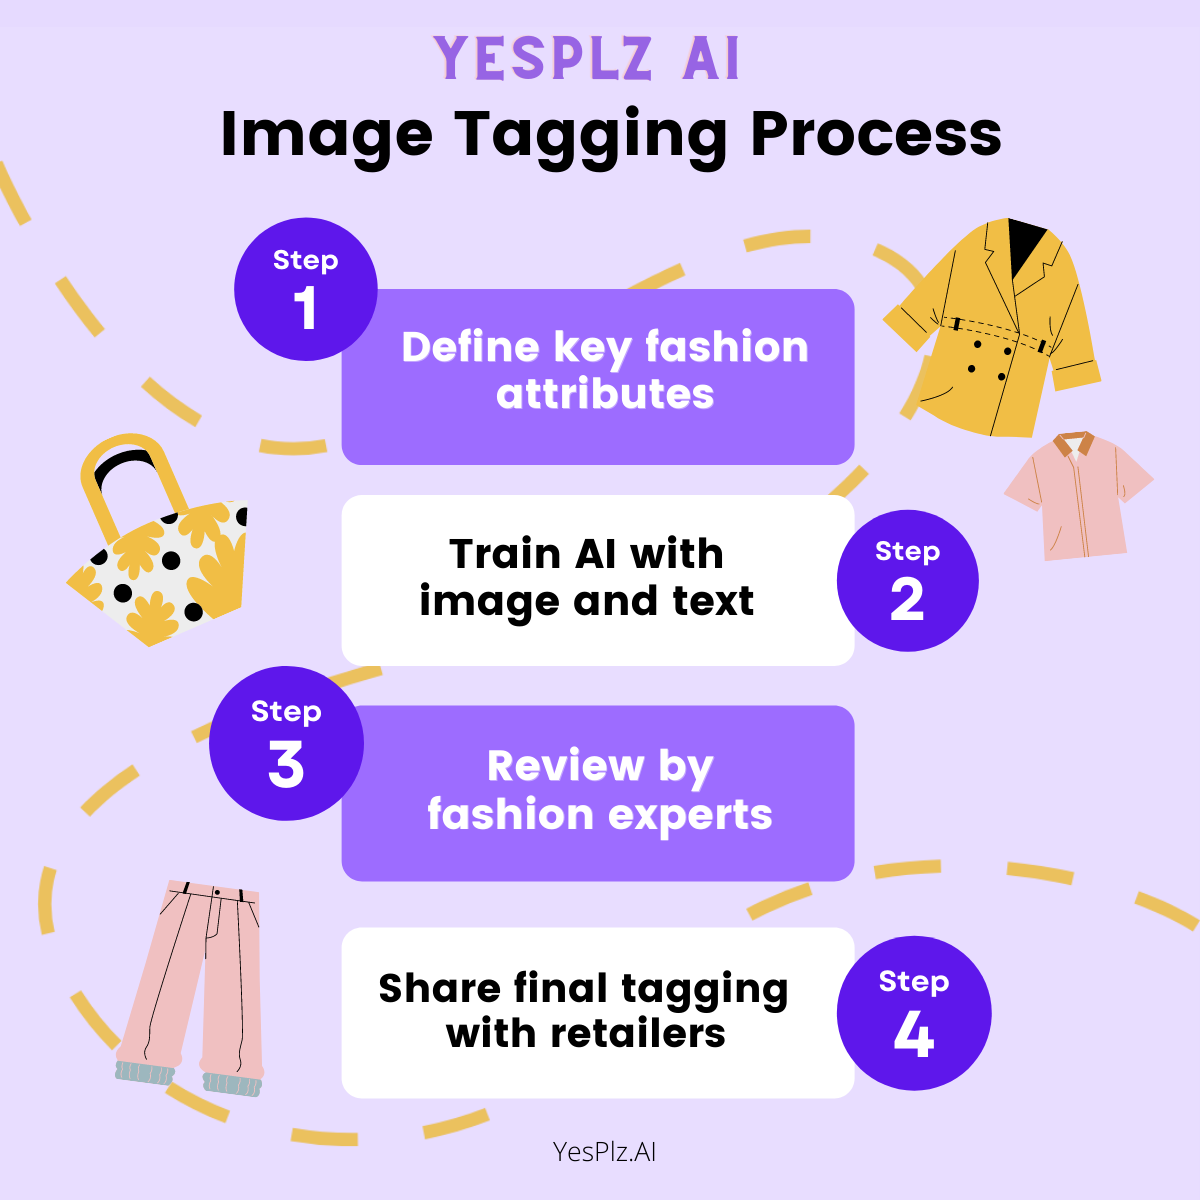 Image tagging process